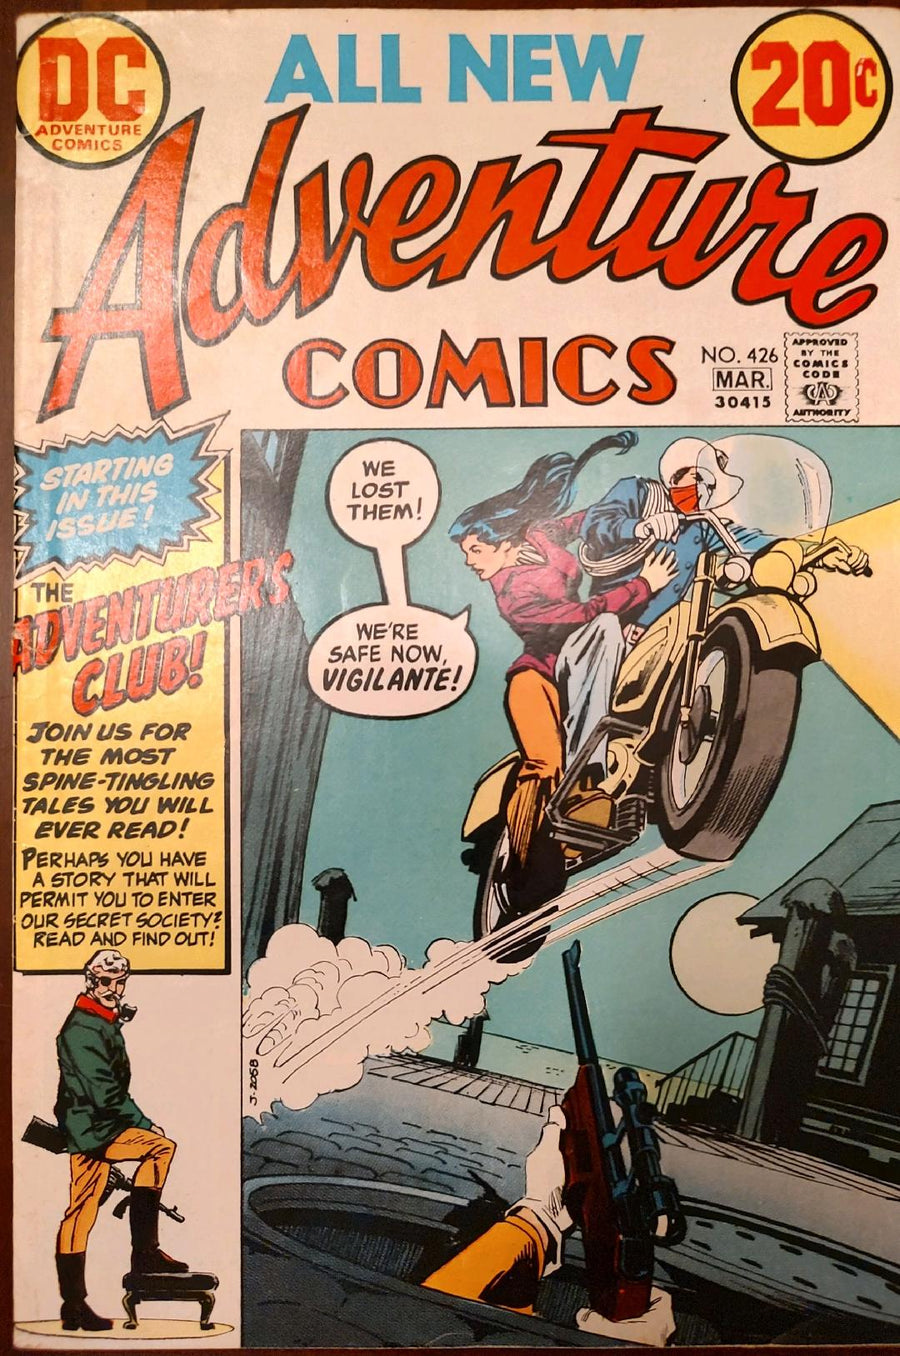 Adventure Comics #426 Comic Book